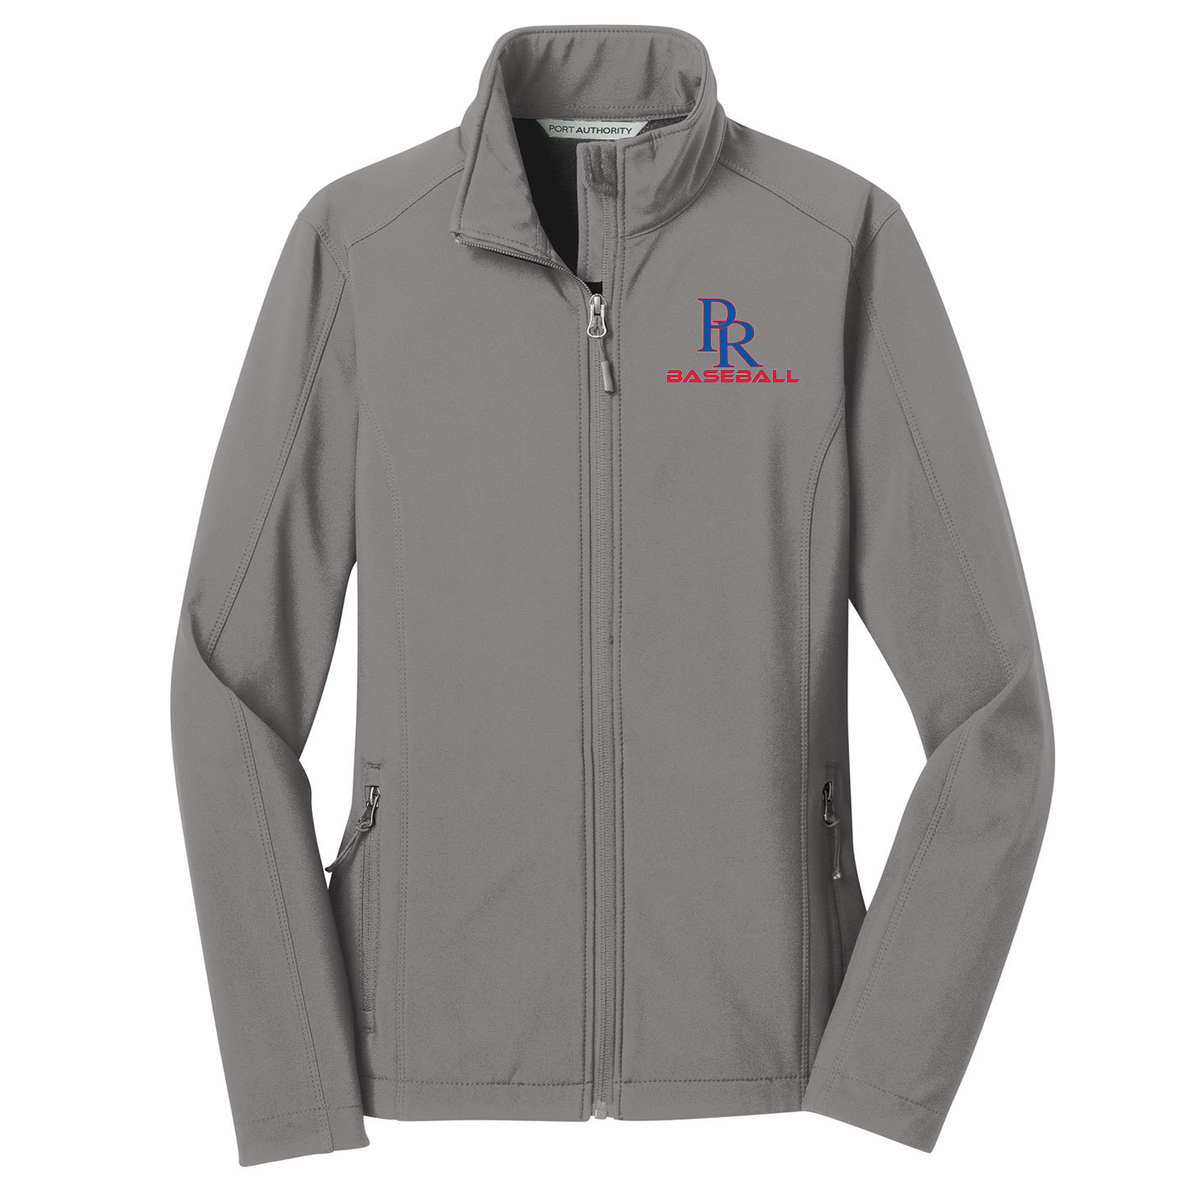 PR Baseball  Women's Soft Shell Jacket